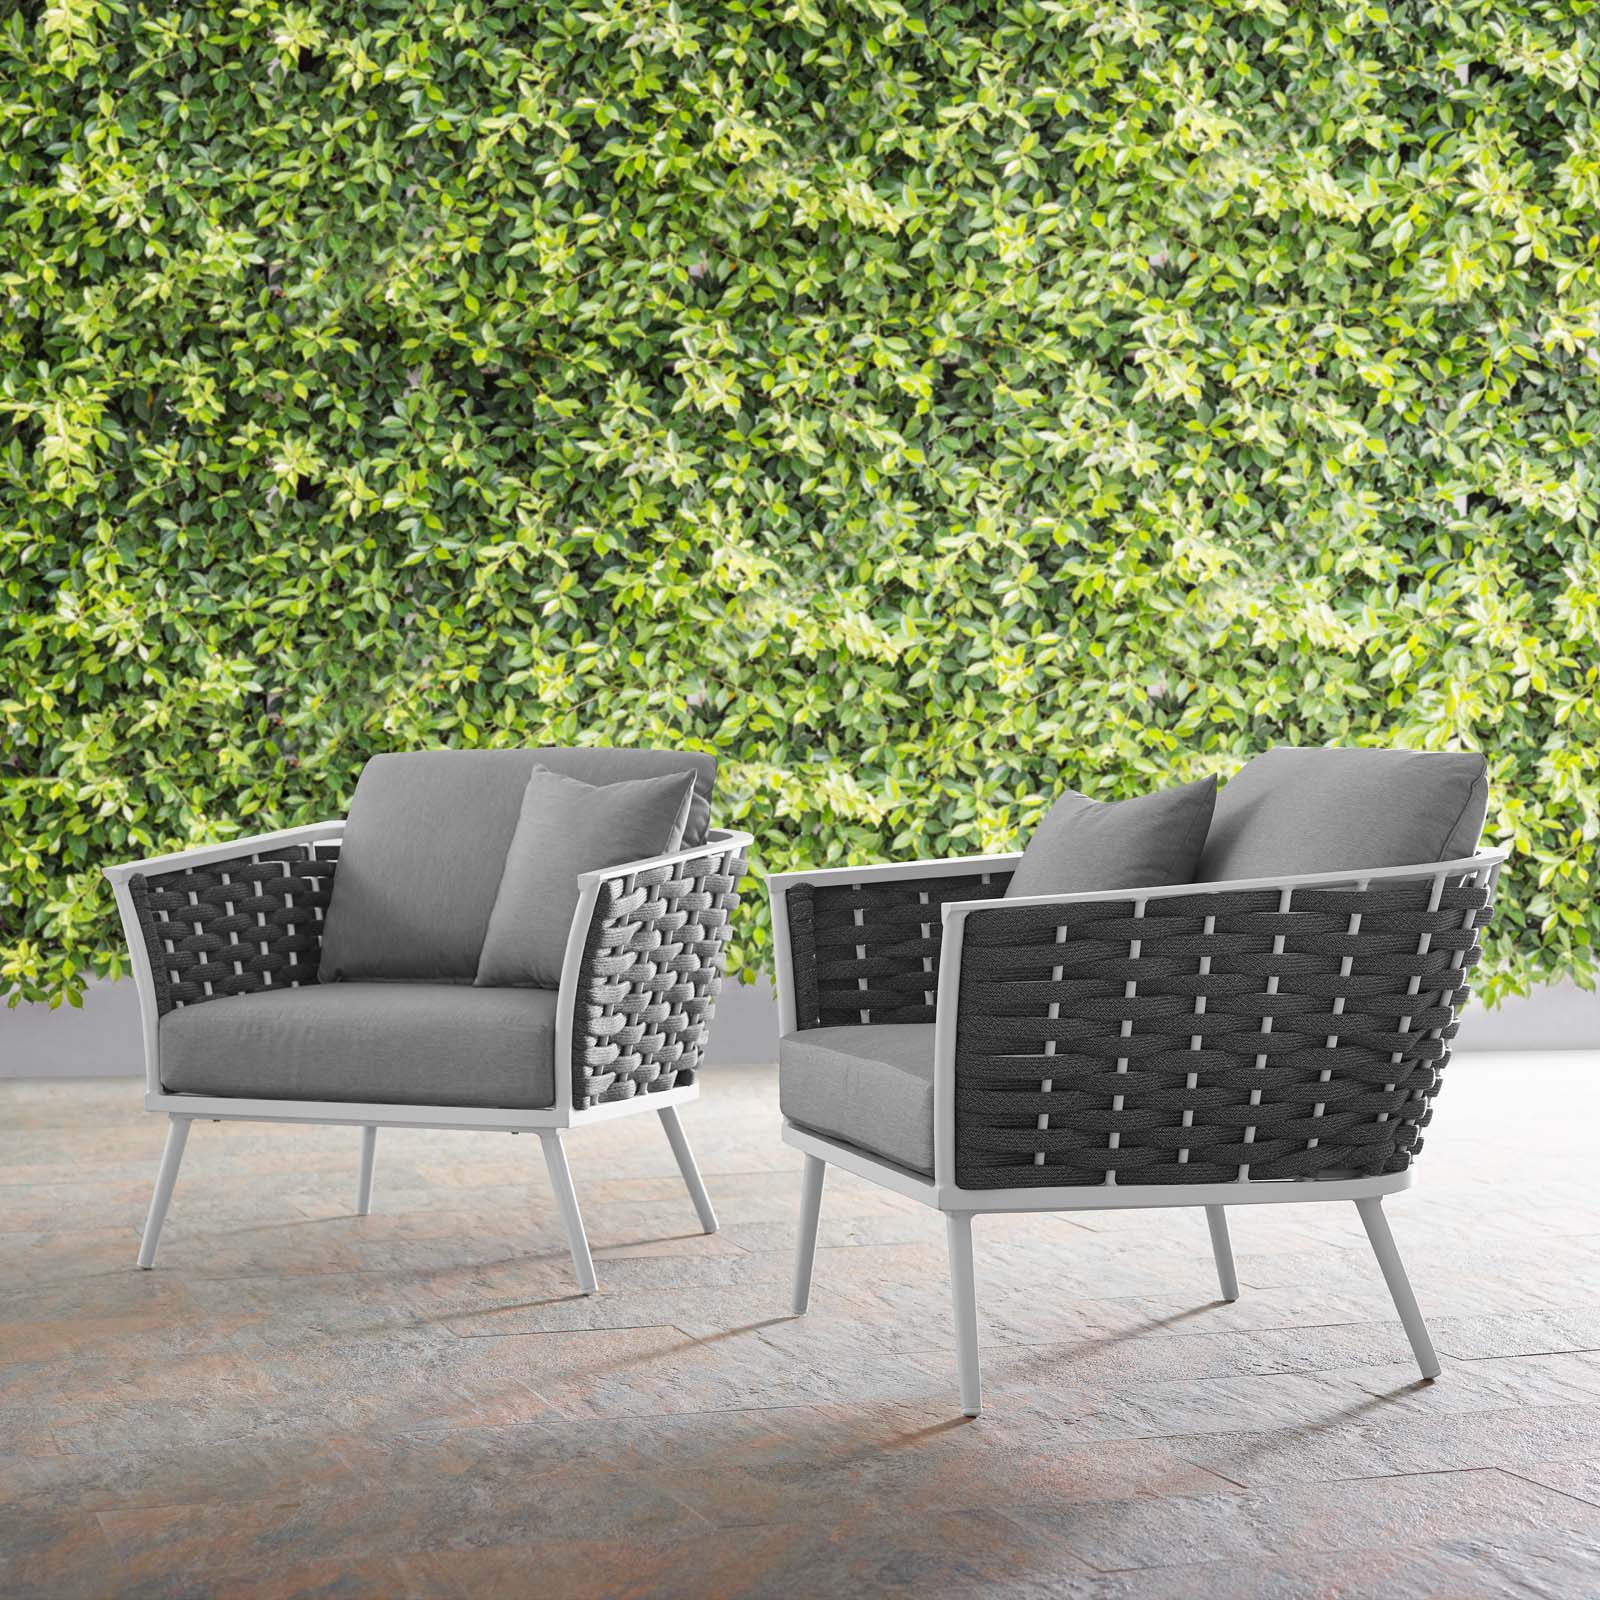 Modern Contemporary Urban Outdoor Patio Balcony Garden Furniture Lounge Chair Armchair, Set of Two, Fabric Aluminium, White Grey Gray - image 2 of 6